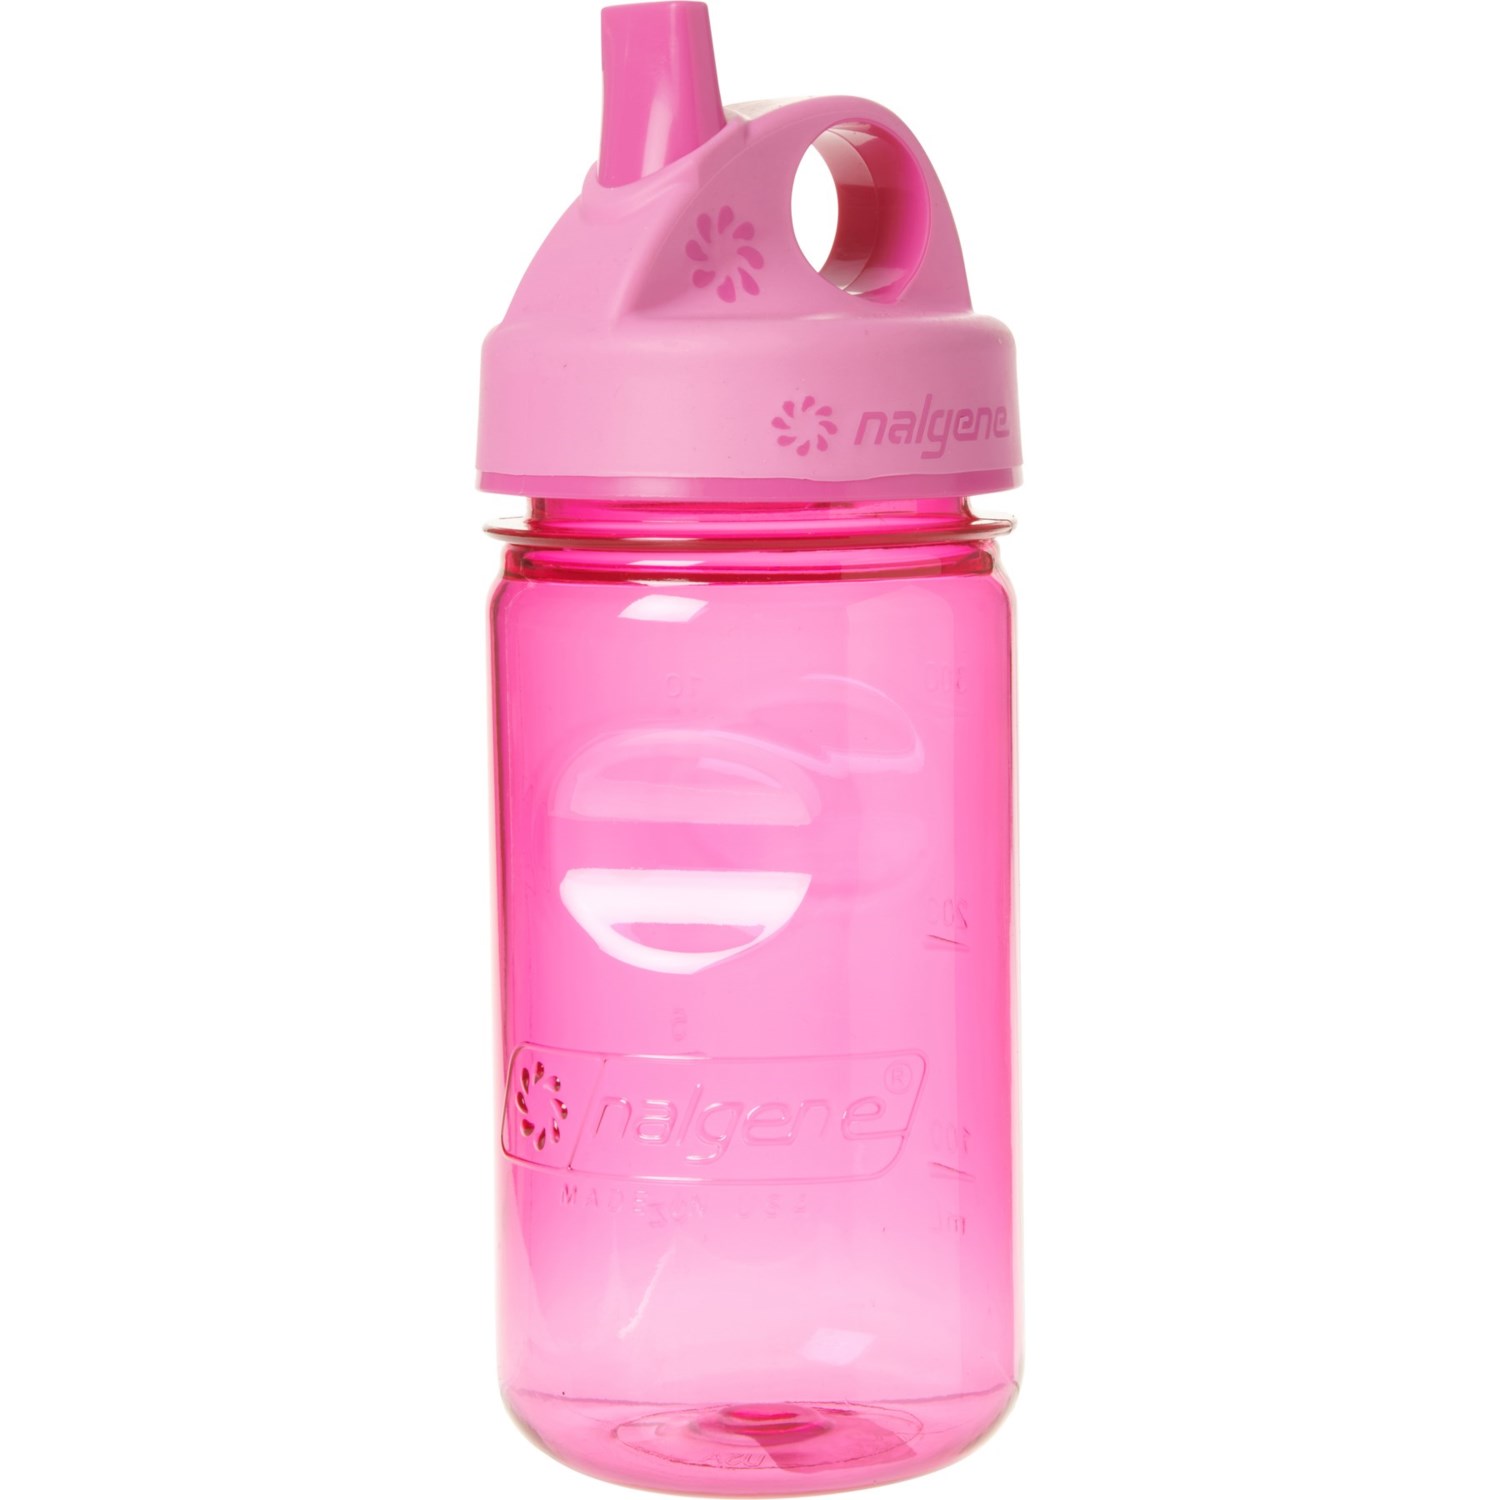 Nalgene Grip-N-Gulp Water Bottle - 12 oz. - Save 45%